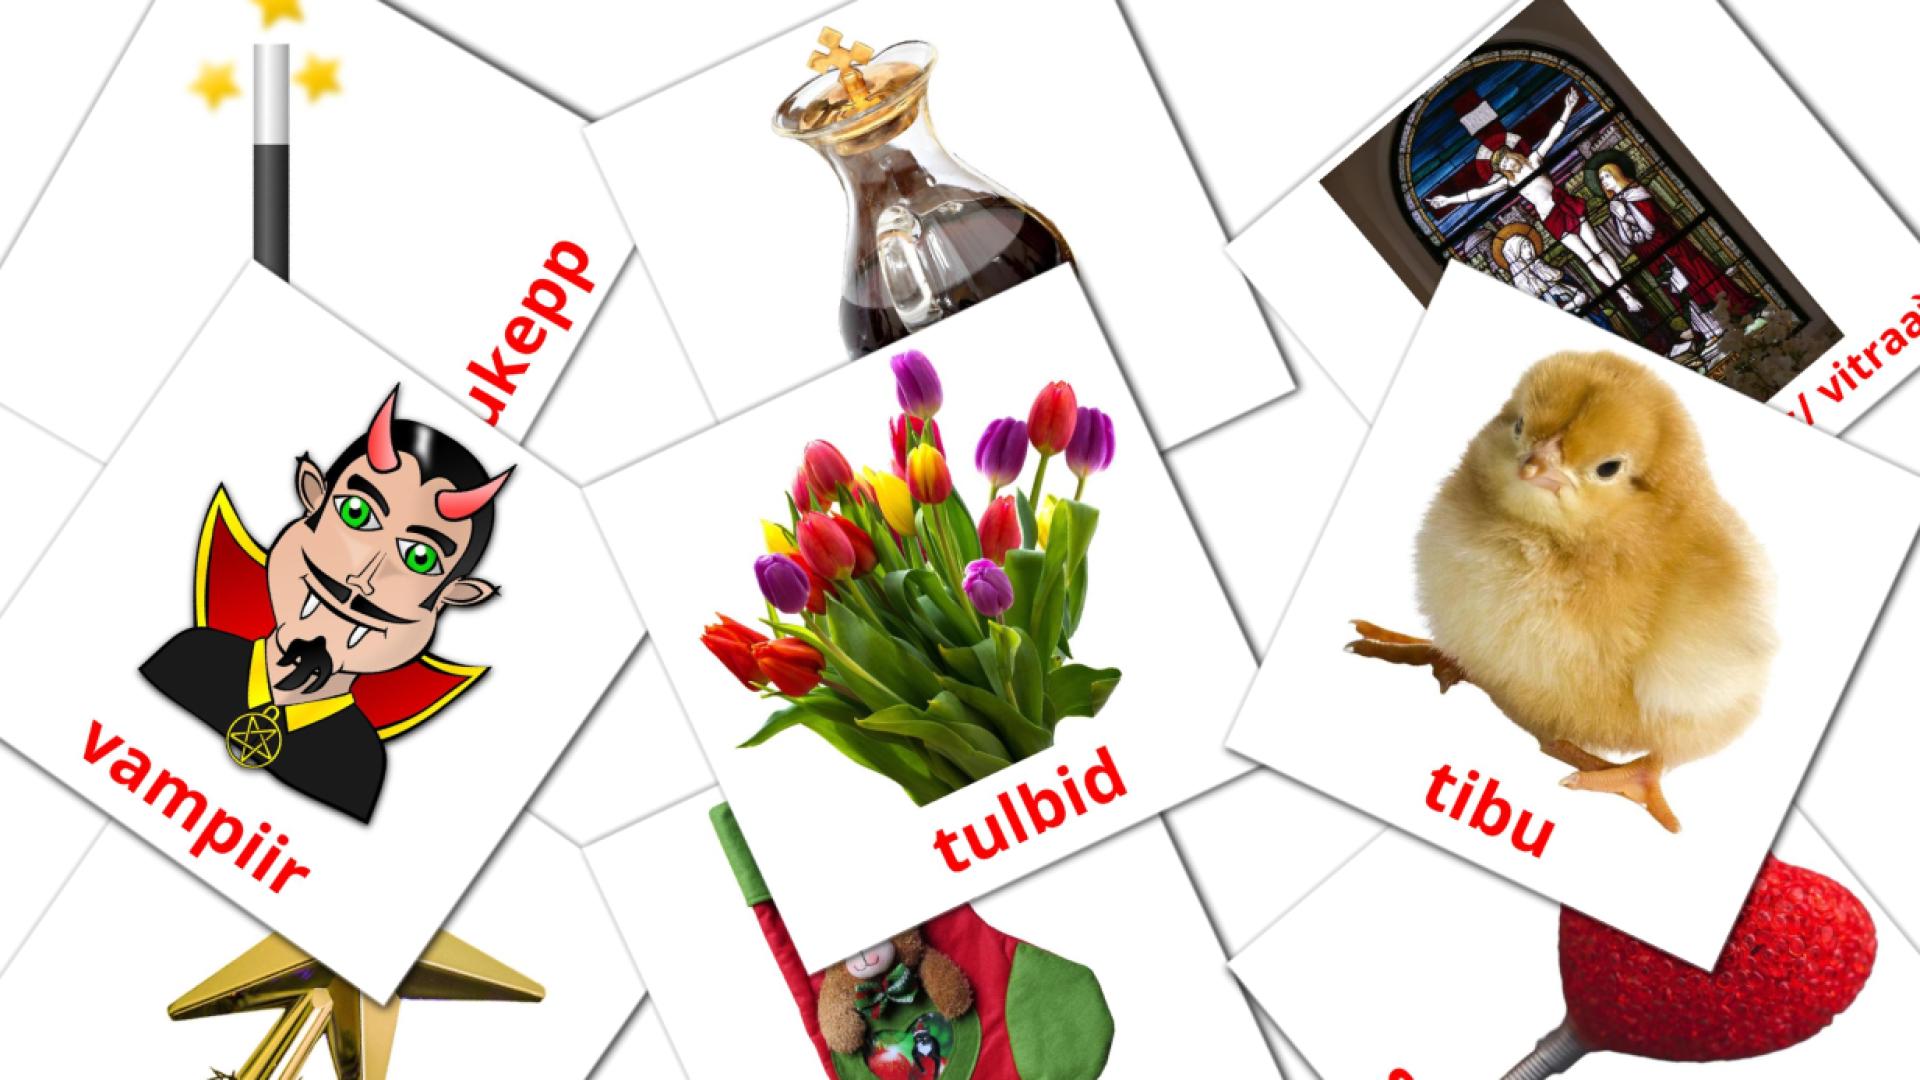 estonio tarjetas de vocabulario en pühad